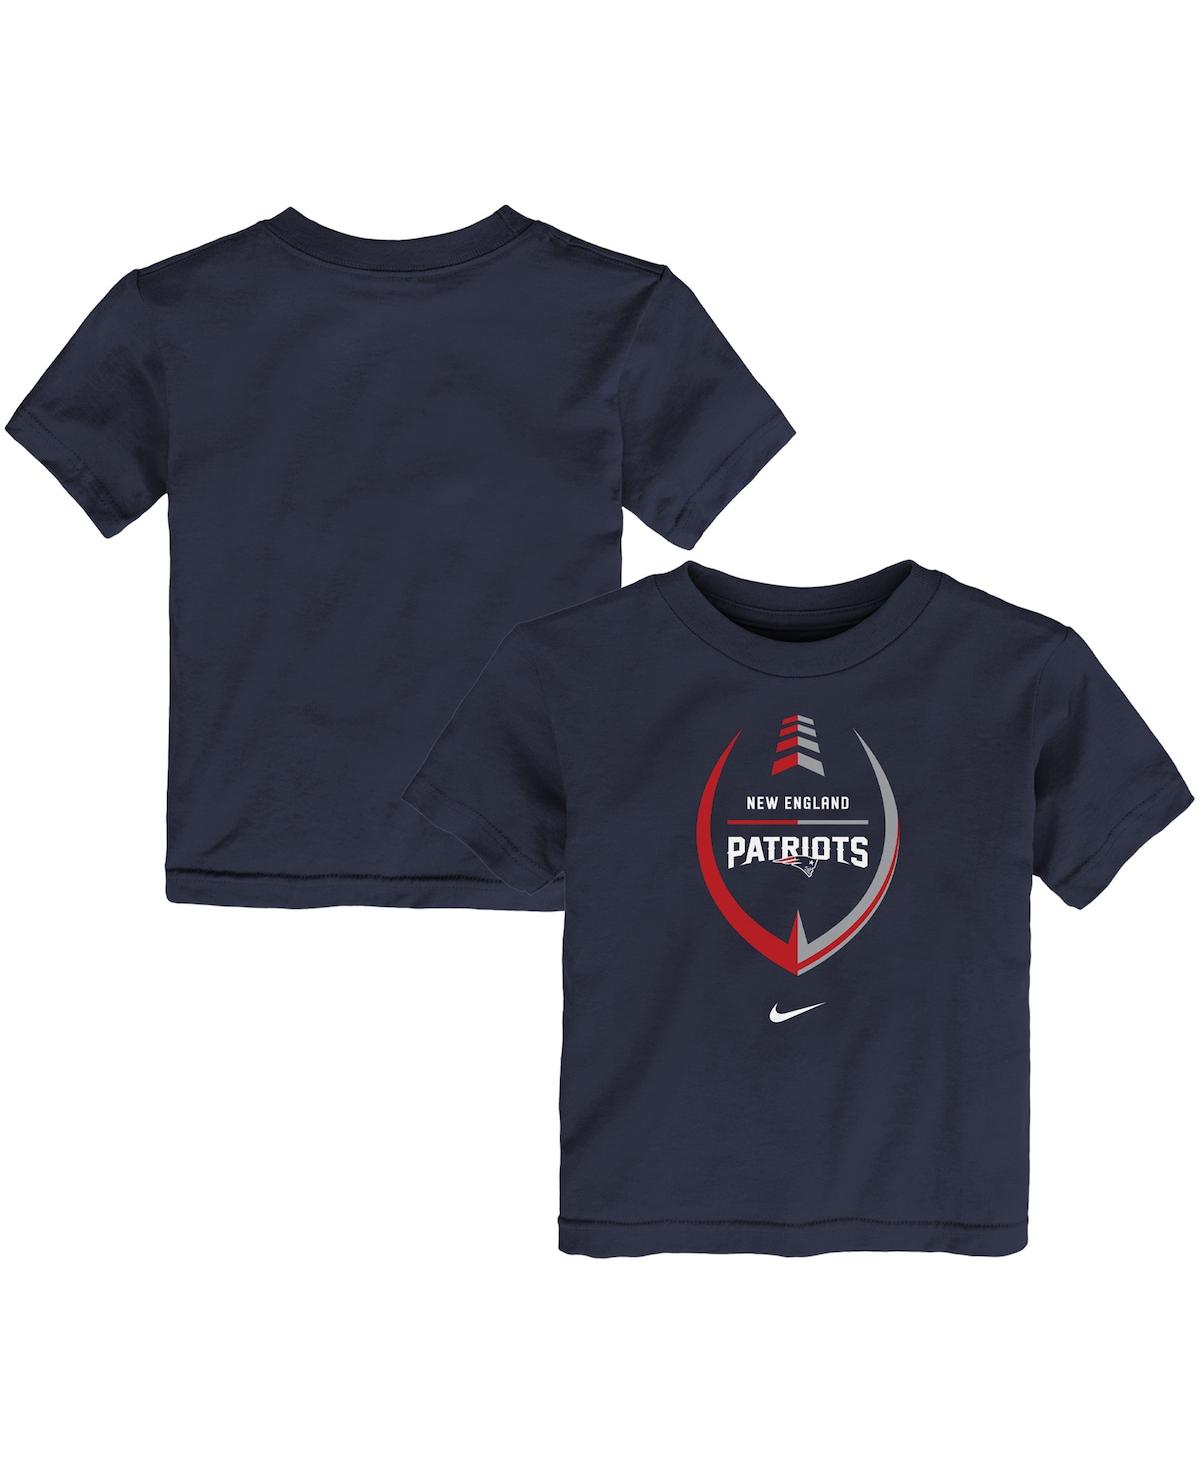 Nike Babies' Toddler Boys And Girls  Navy Chicago Bears Football Wordmark T-shirt